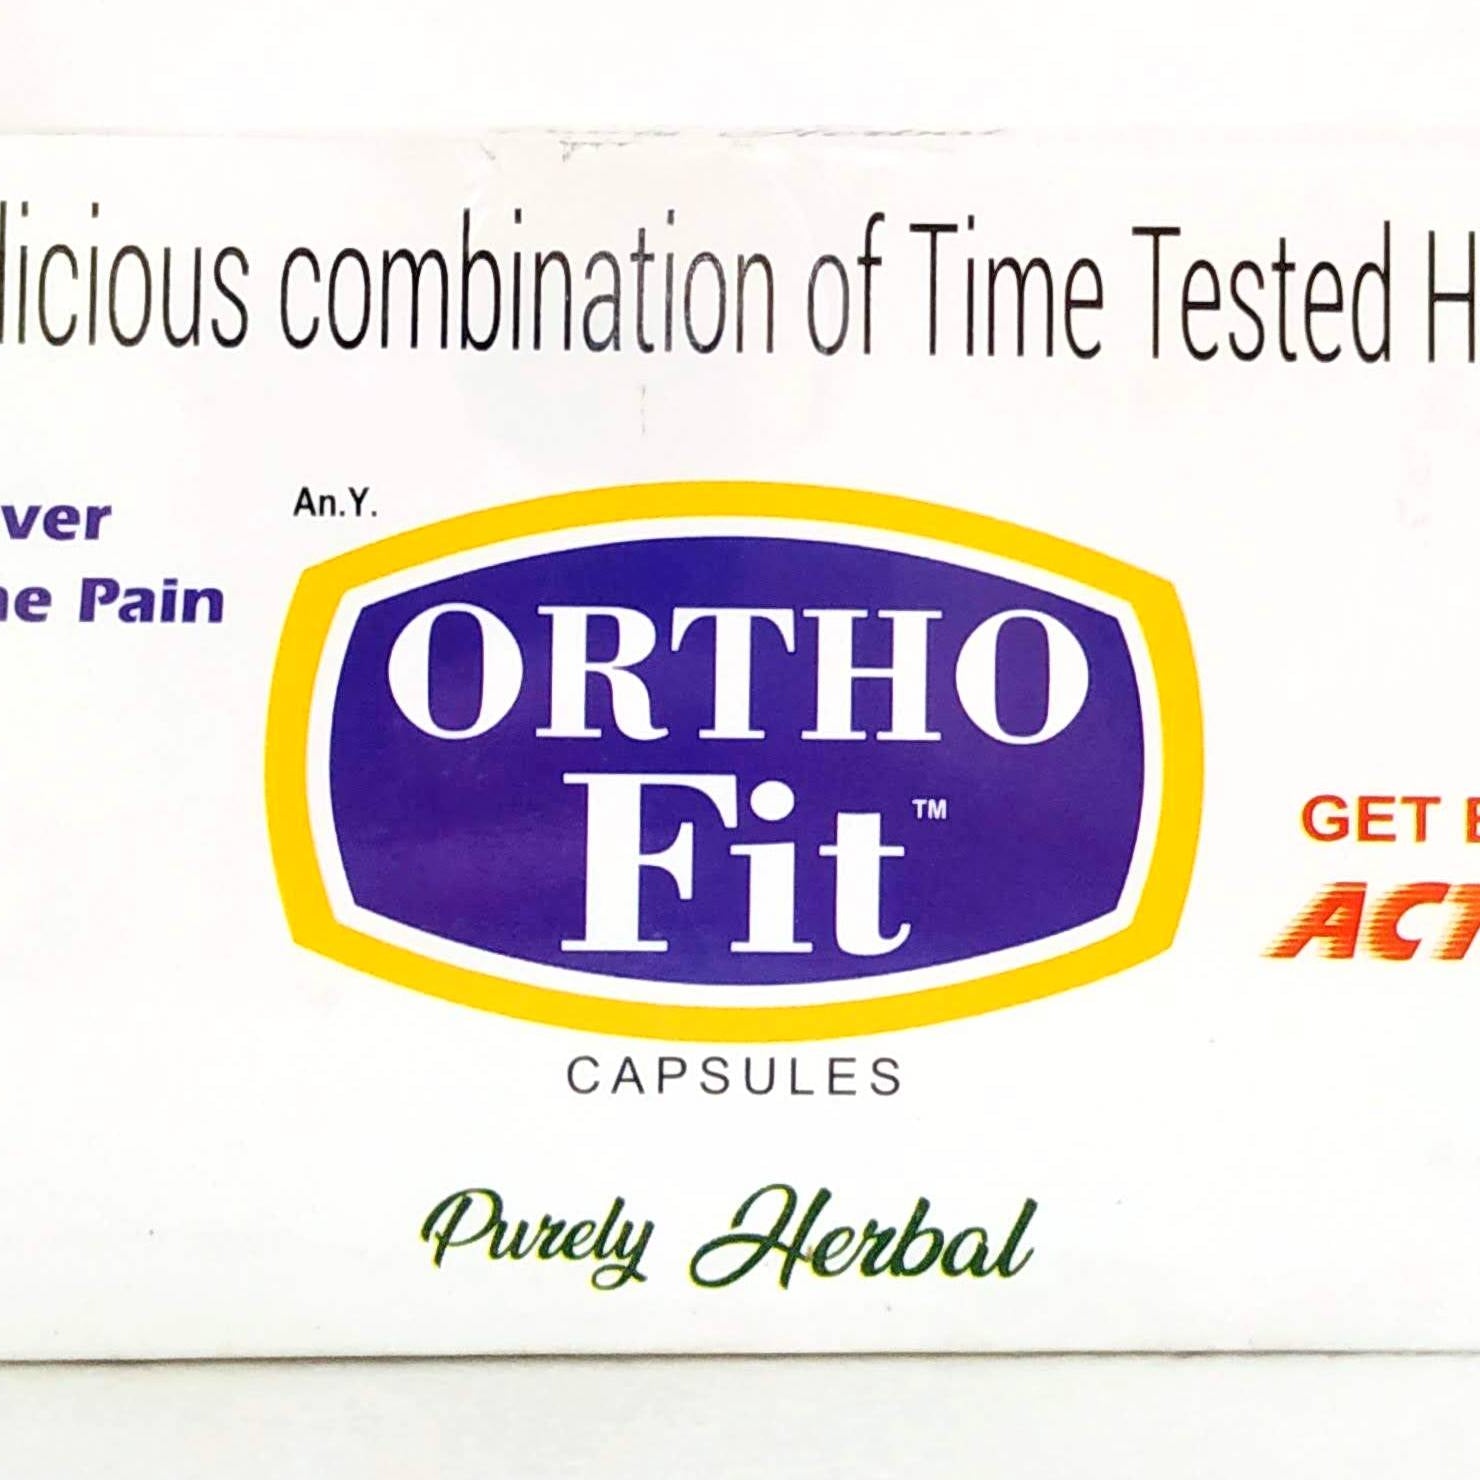 Shop Orthofit capsules - 10Capsules at price 80.00 from Fizikem Online - Ayush Care